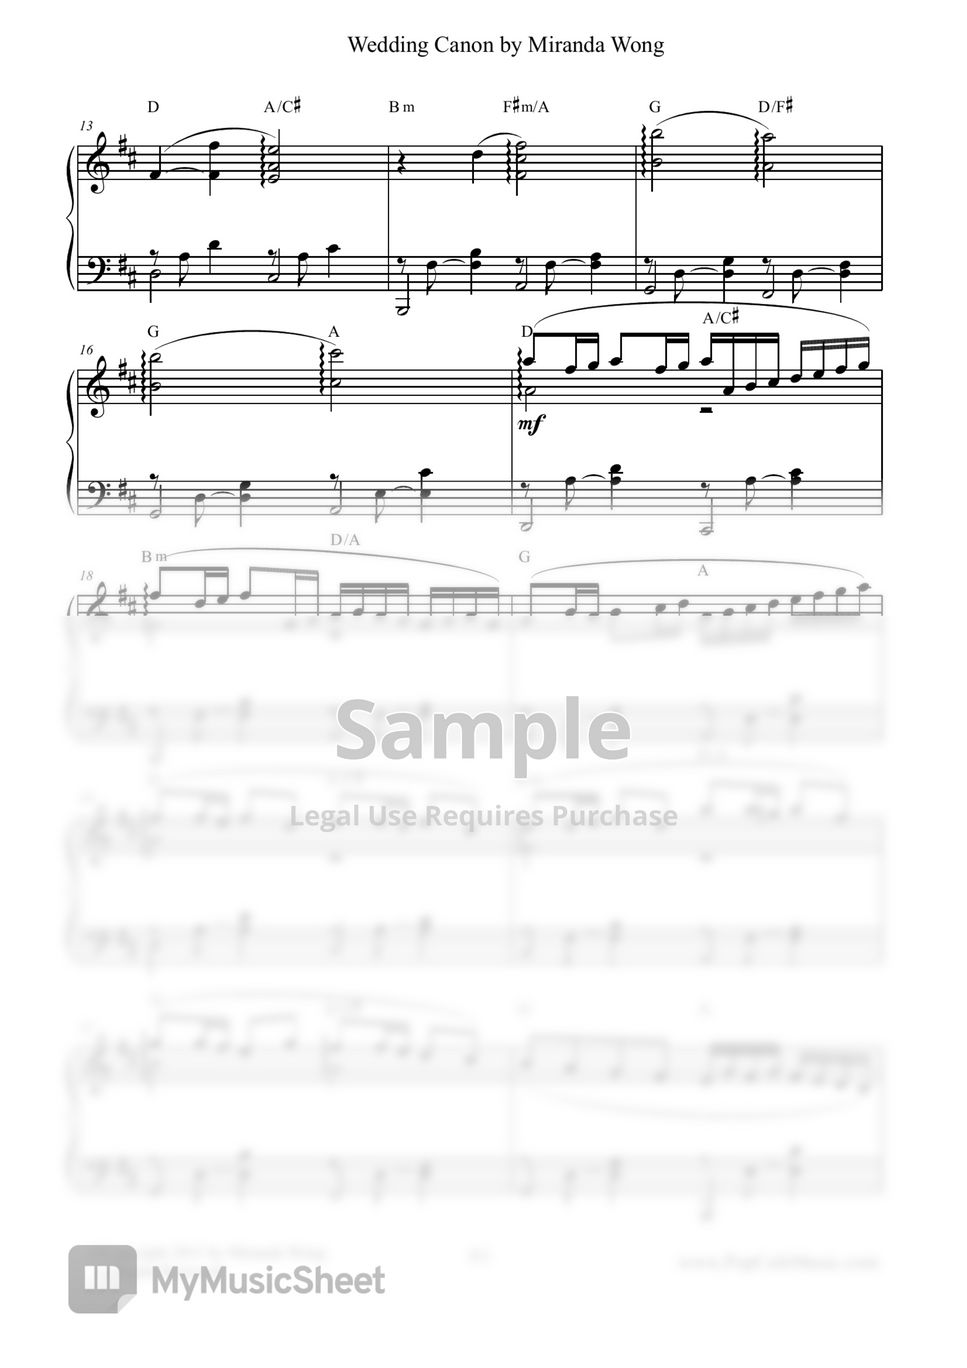 Pachelbel - Wedding Canon - Romantic Wedding Piano Music in D Key (New Popular Version) by Miranda Wong